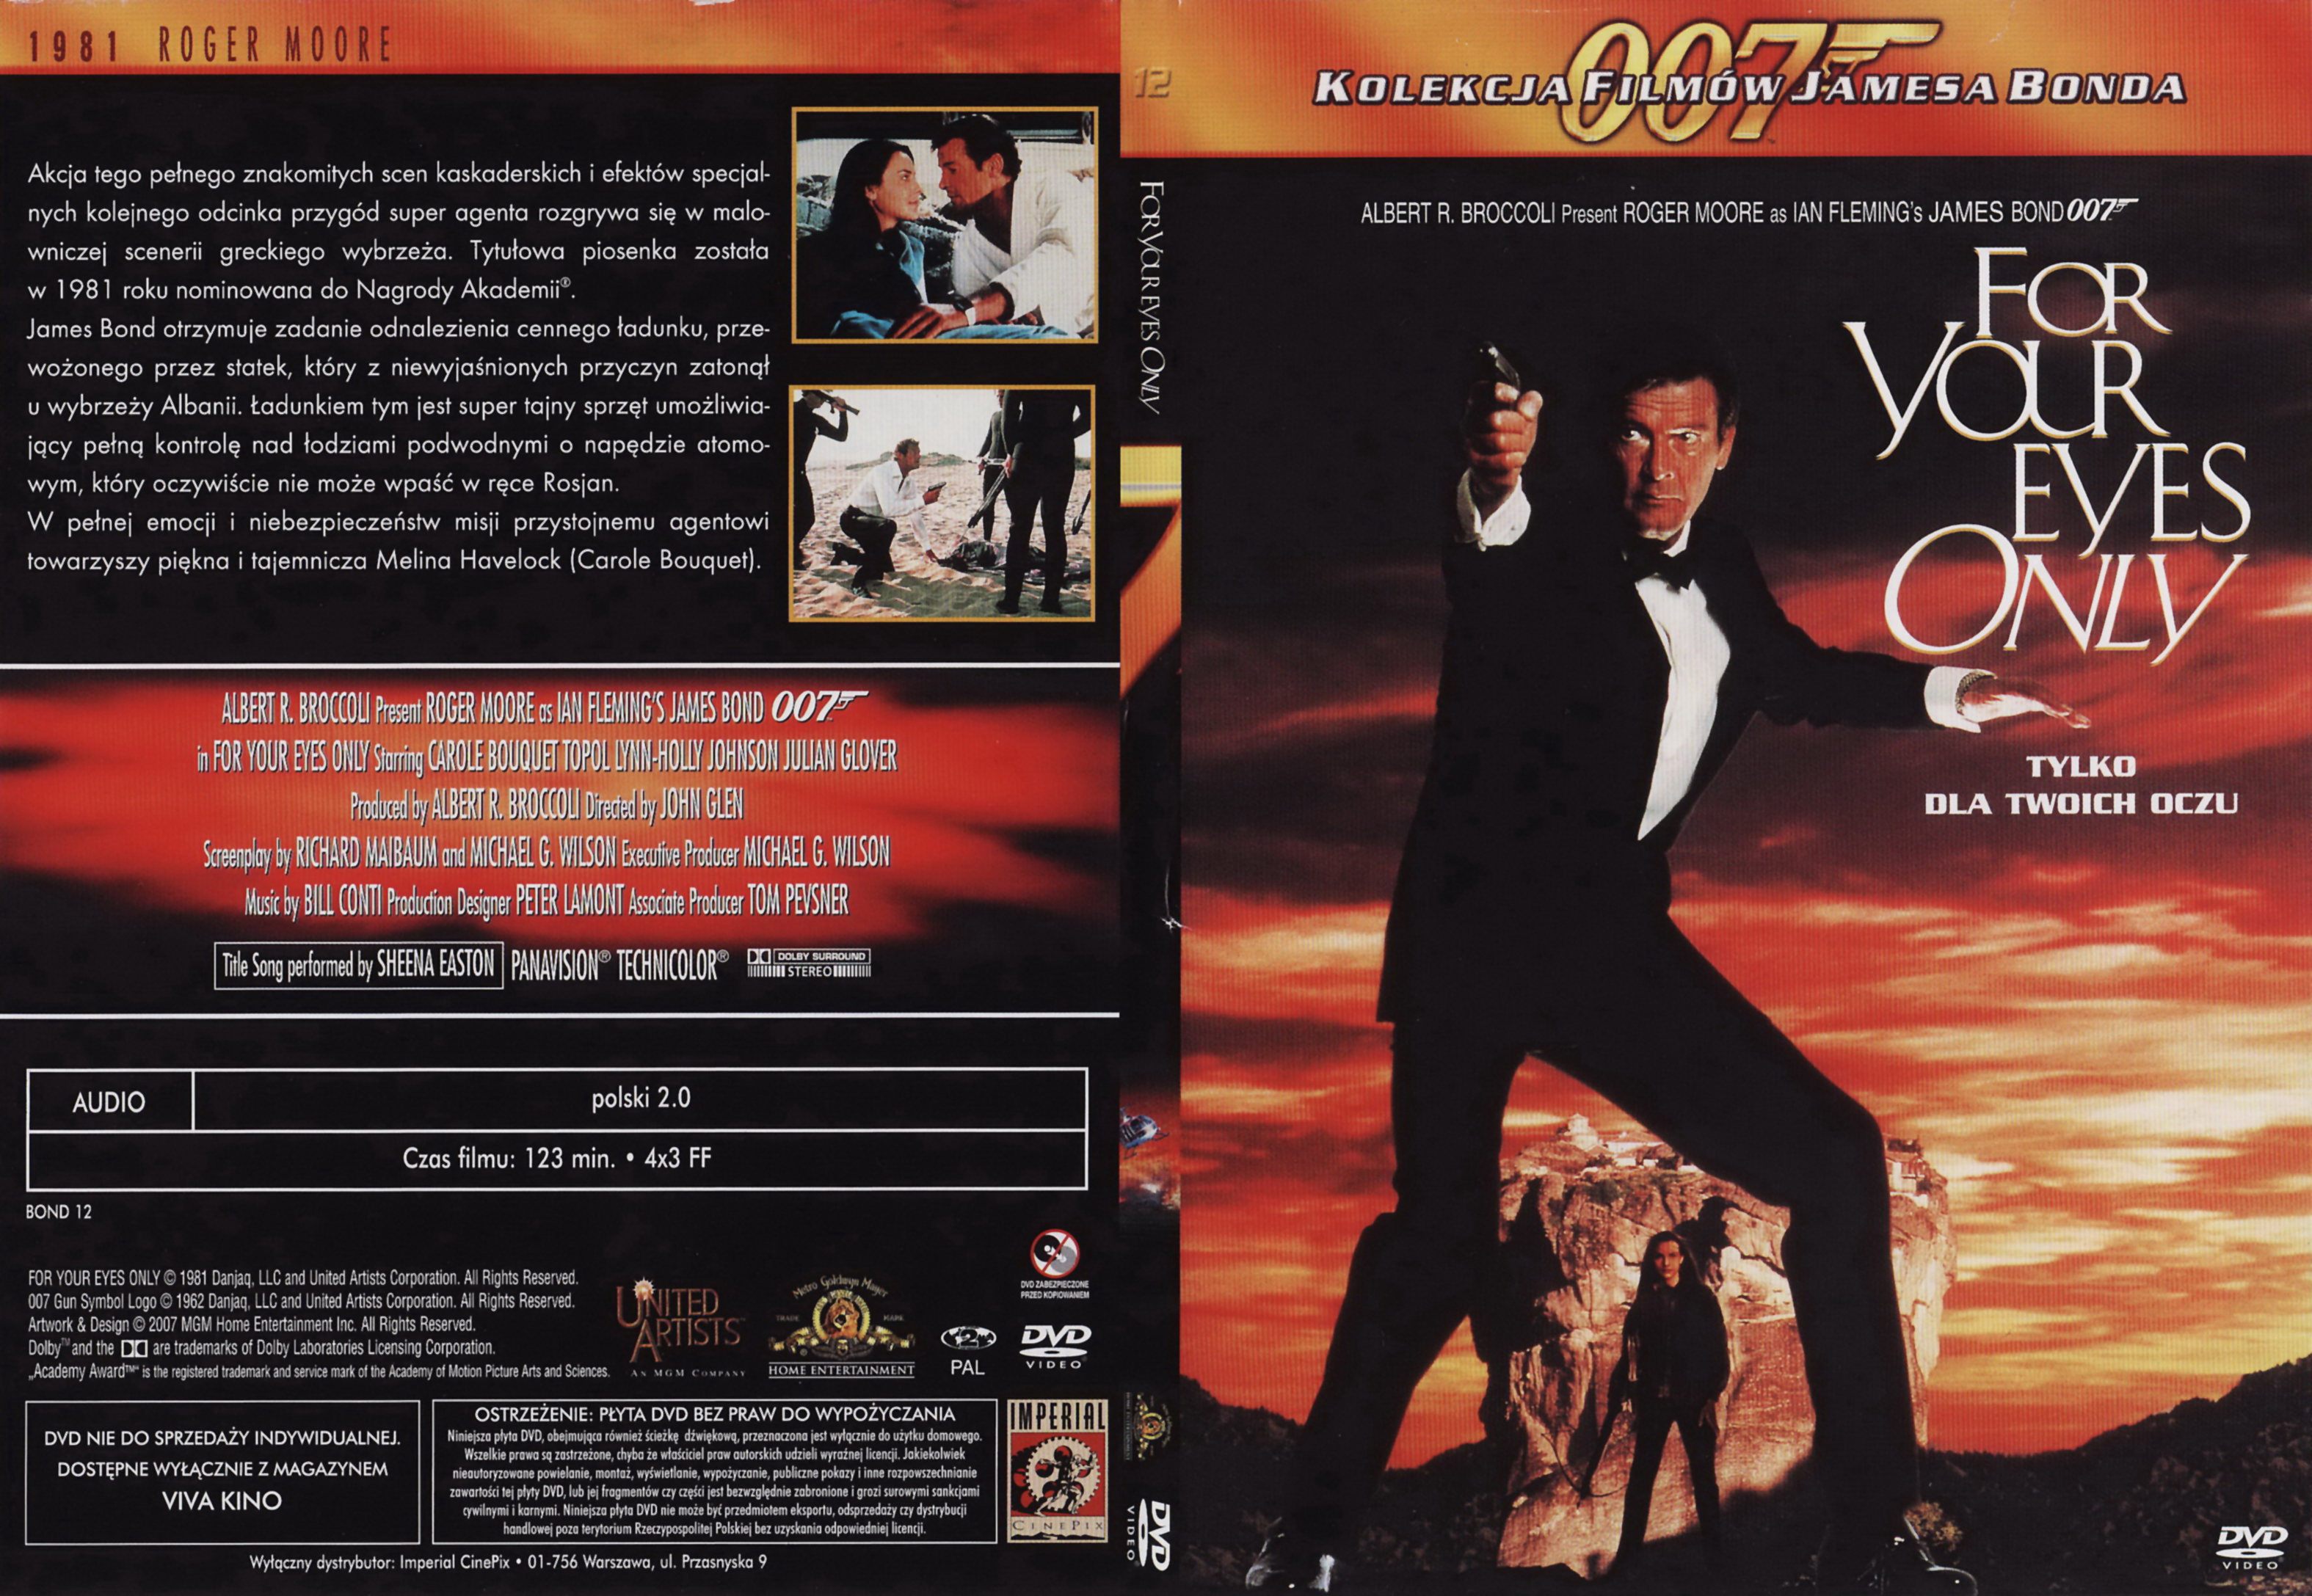 James Bond - 007 Comple... - James Bond D 007-12 Tylko dla Twoich oczu - For Your Eyes Only 1981.06.24 DVD PL.jpg